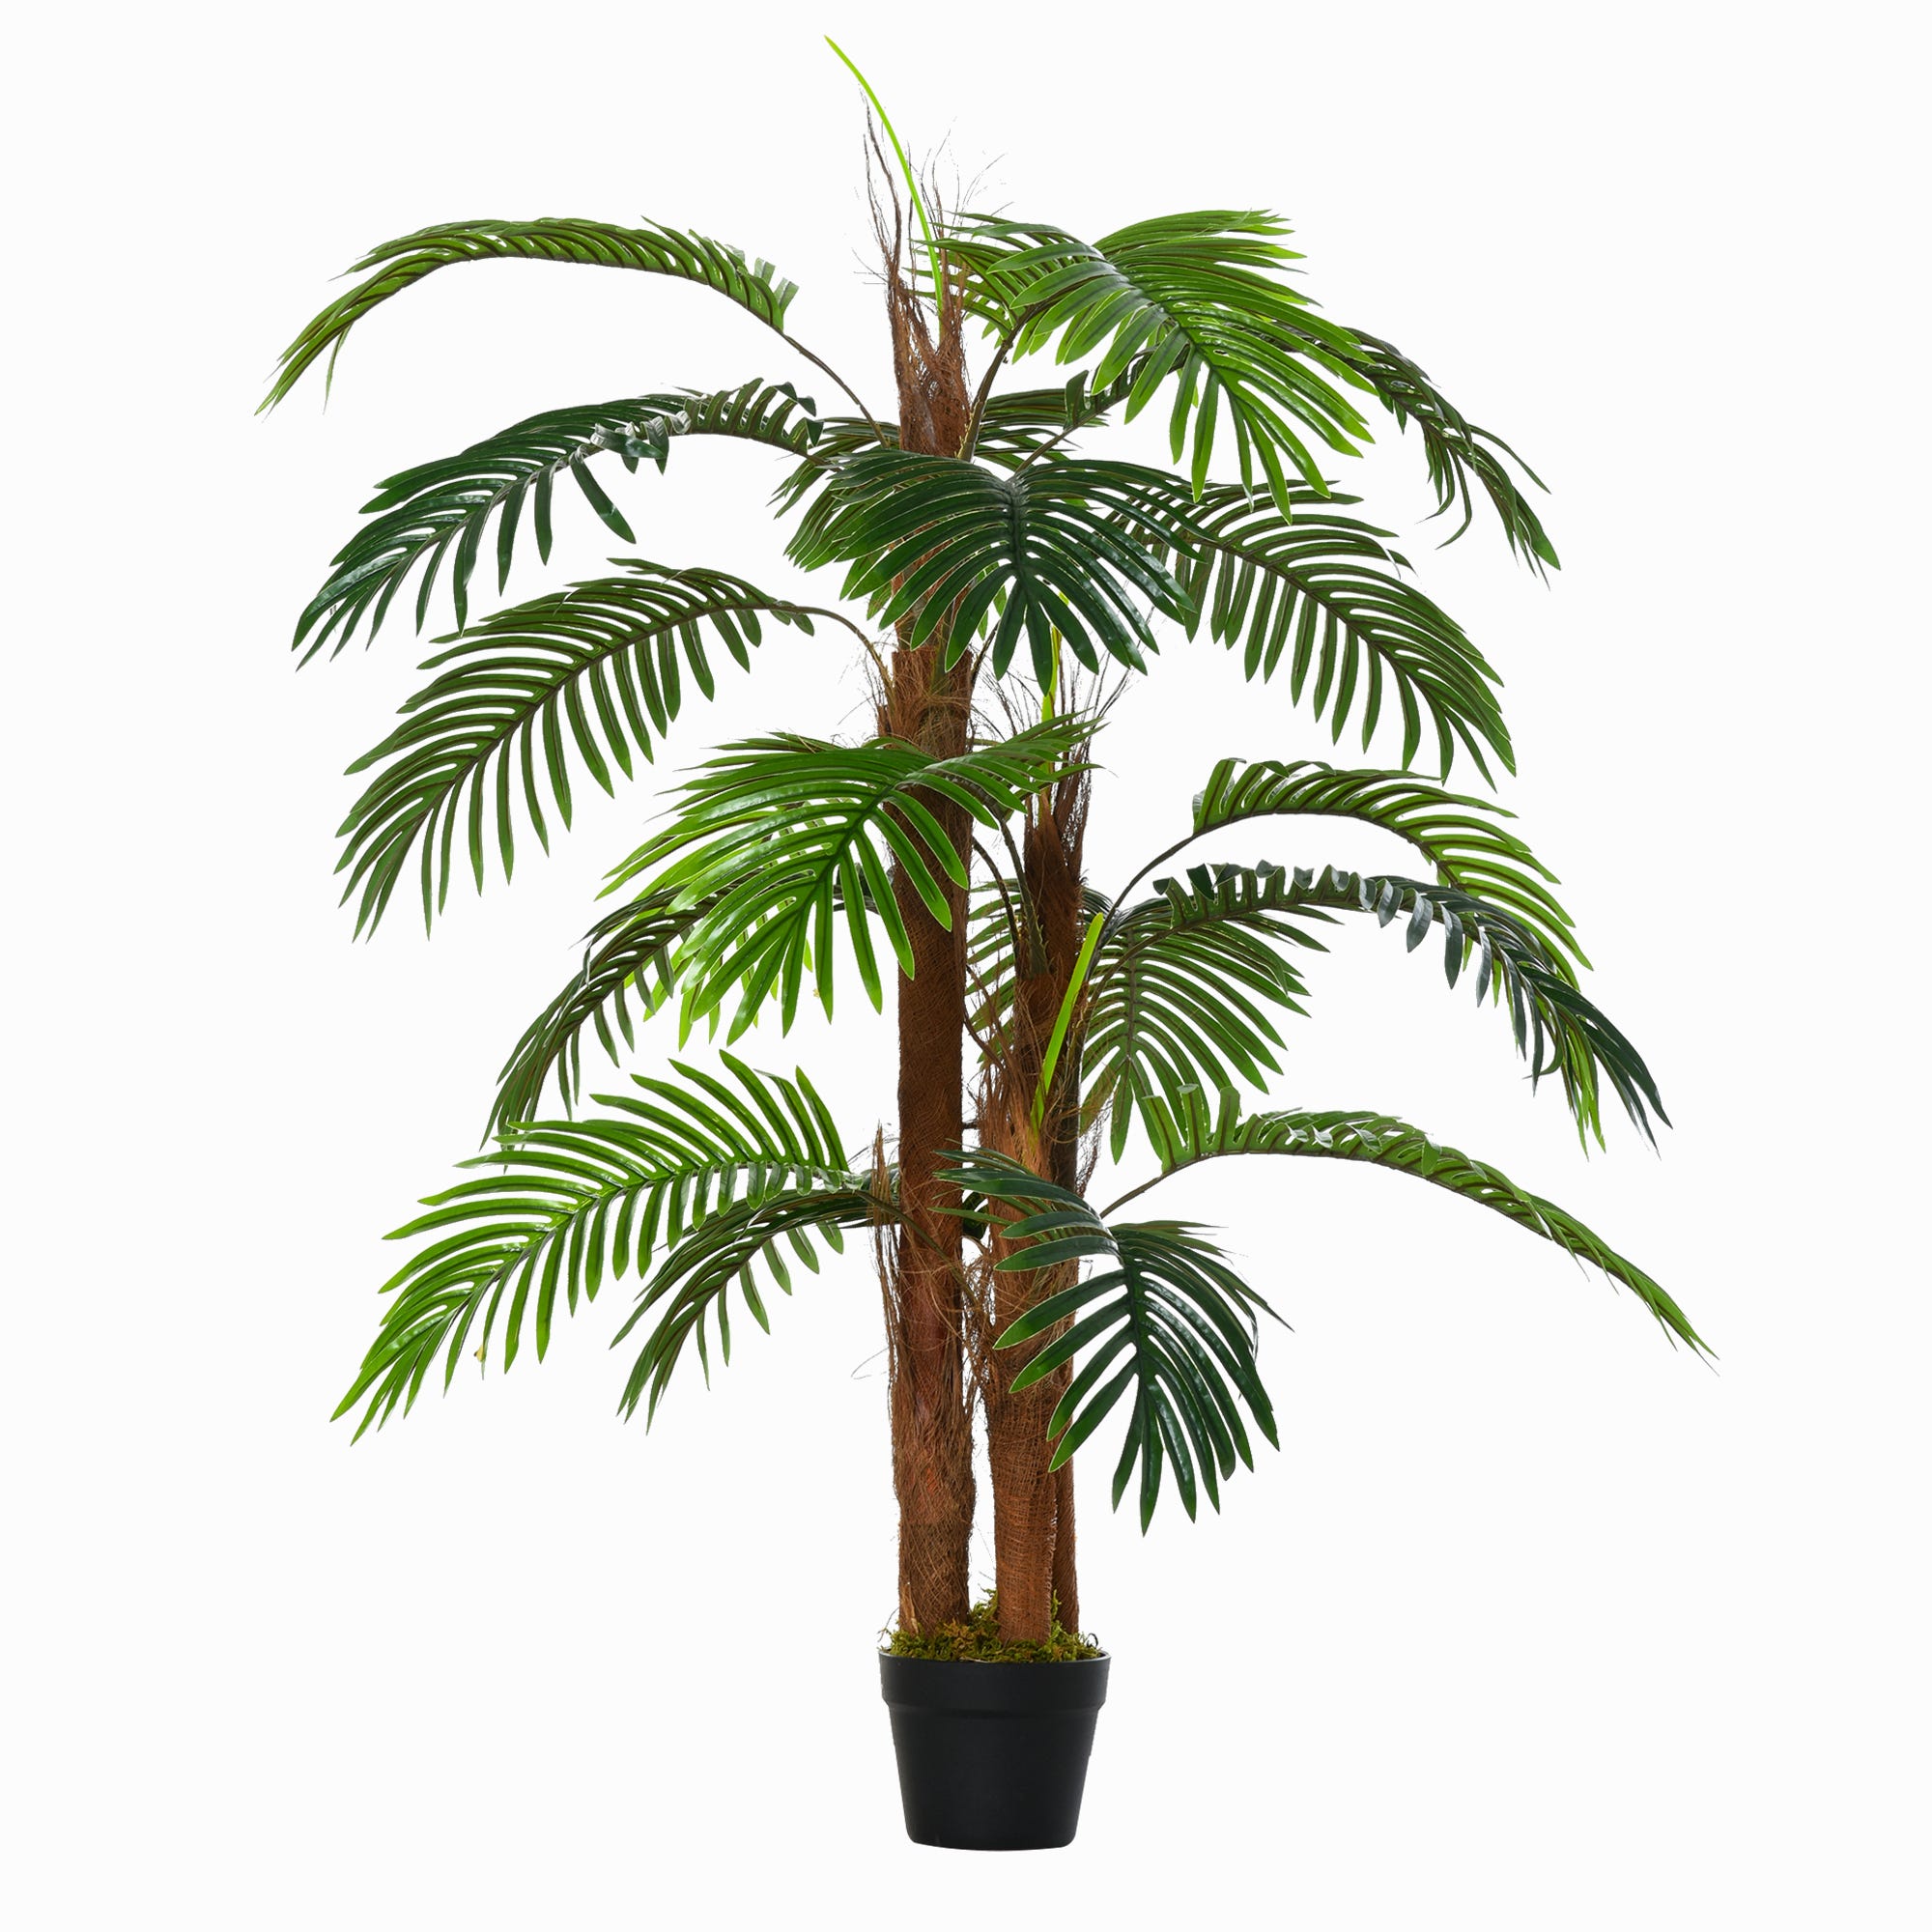 Choisir son palmier d'extérieur - Gamm vert